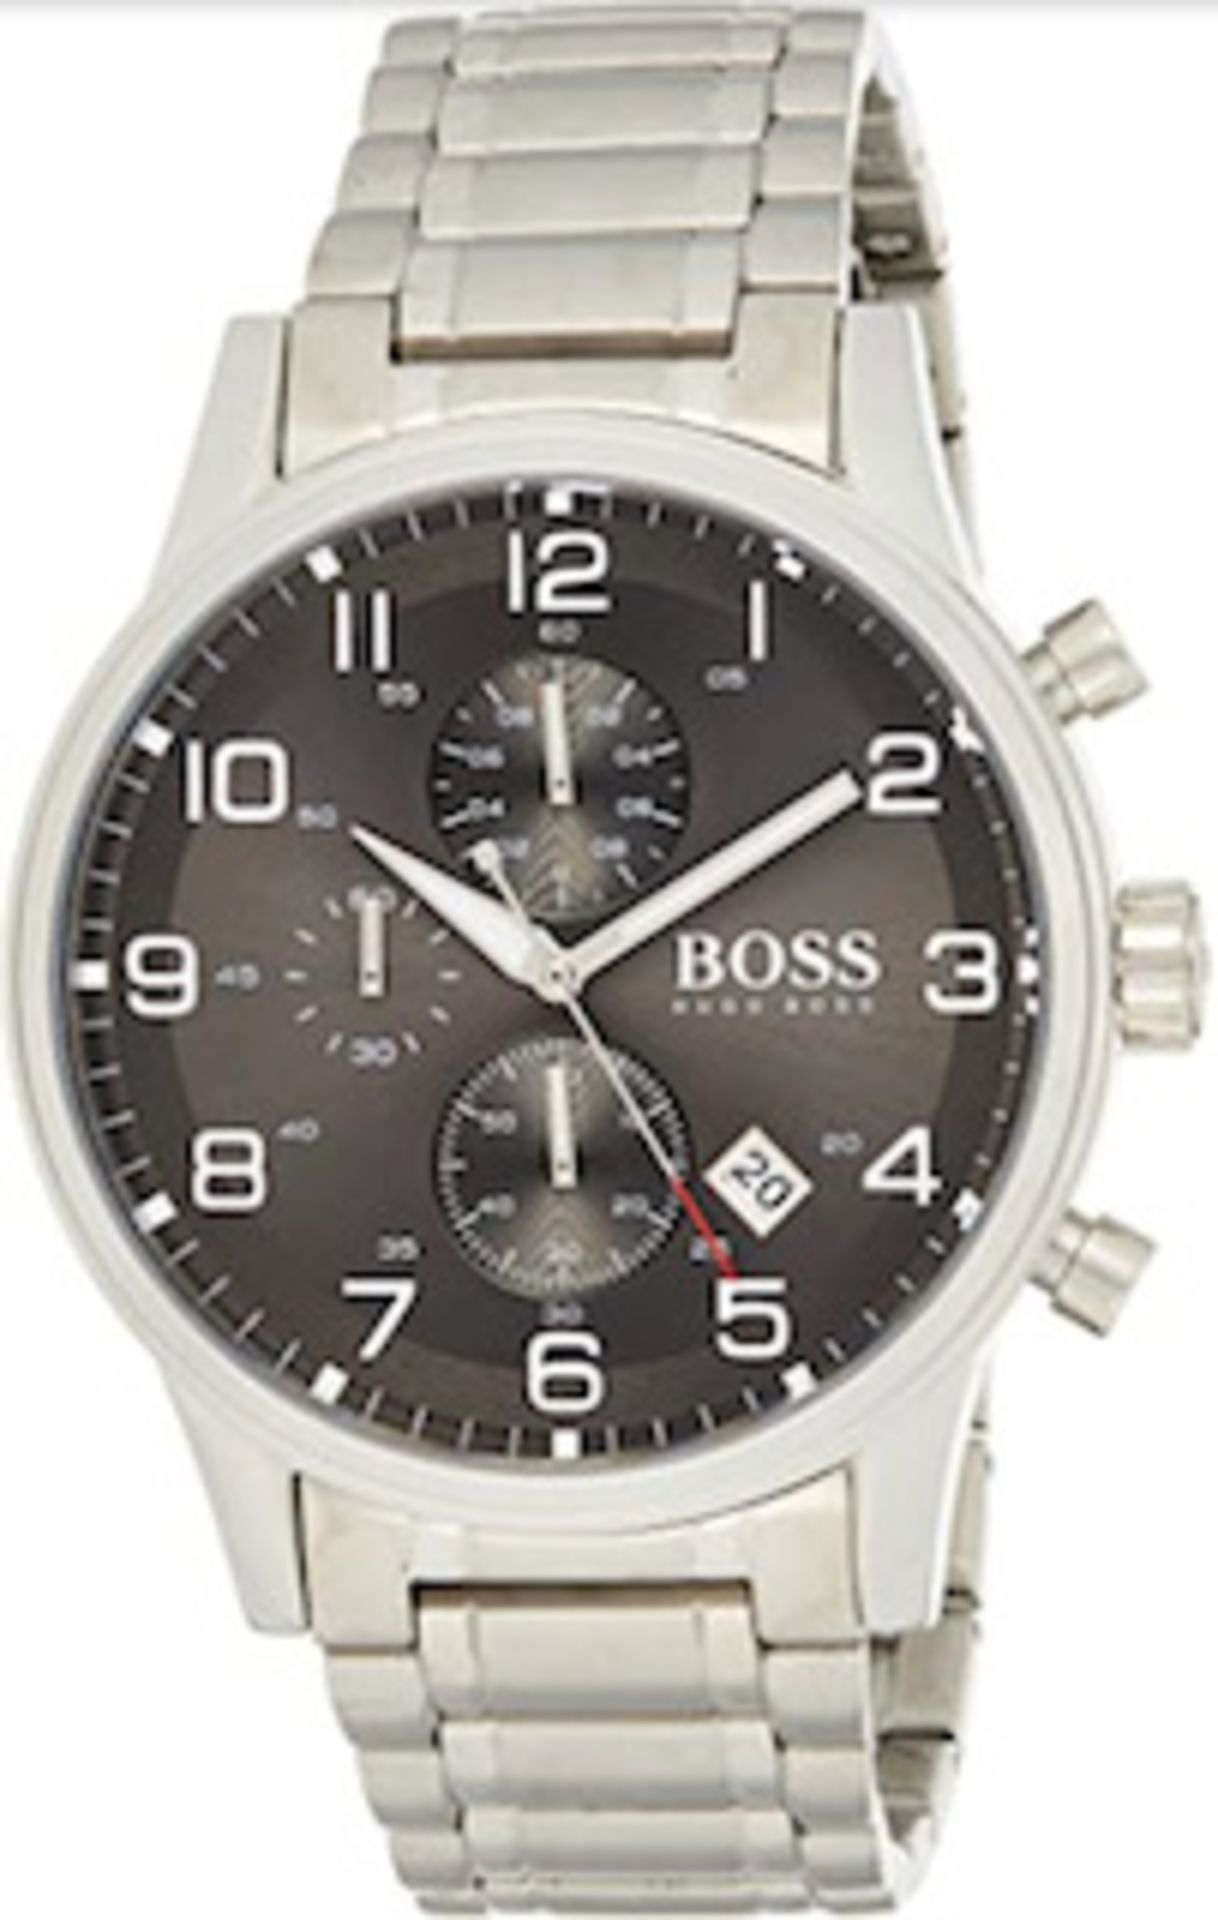 Hugo Boss Men's Black Aeroliner Multi-Functional Chronograph Watch 1513181 - Image 2 of 5